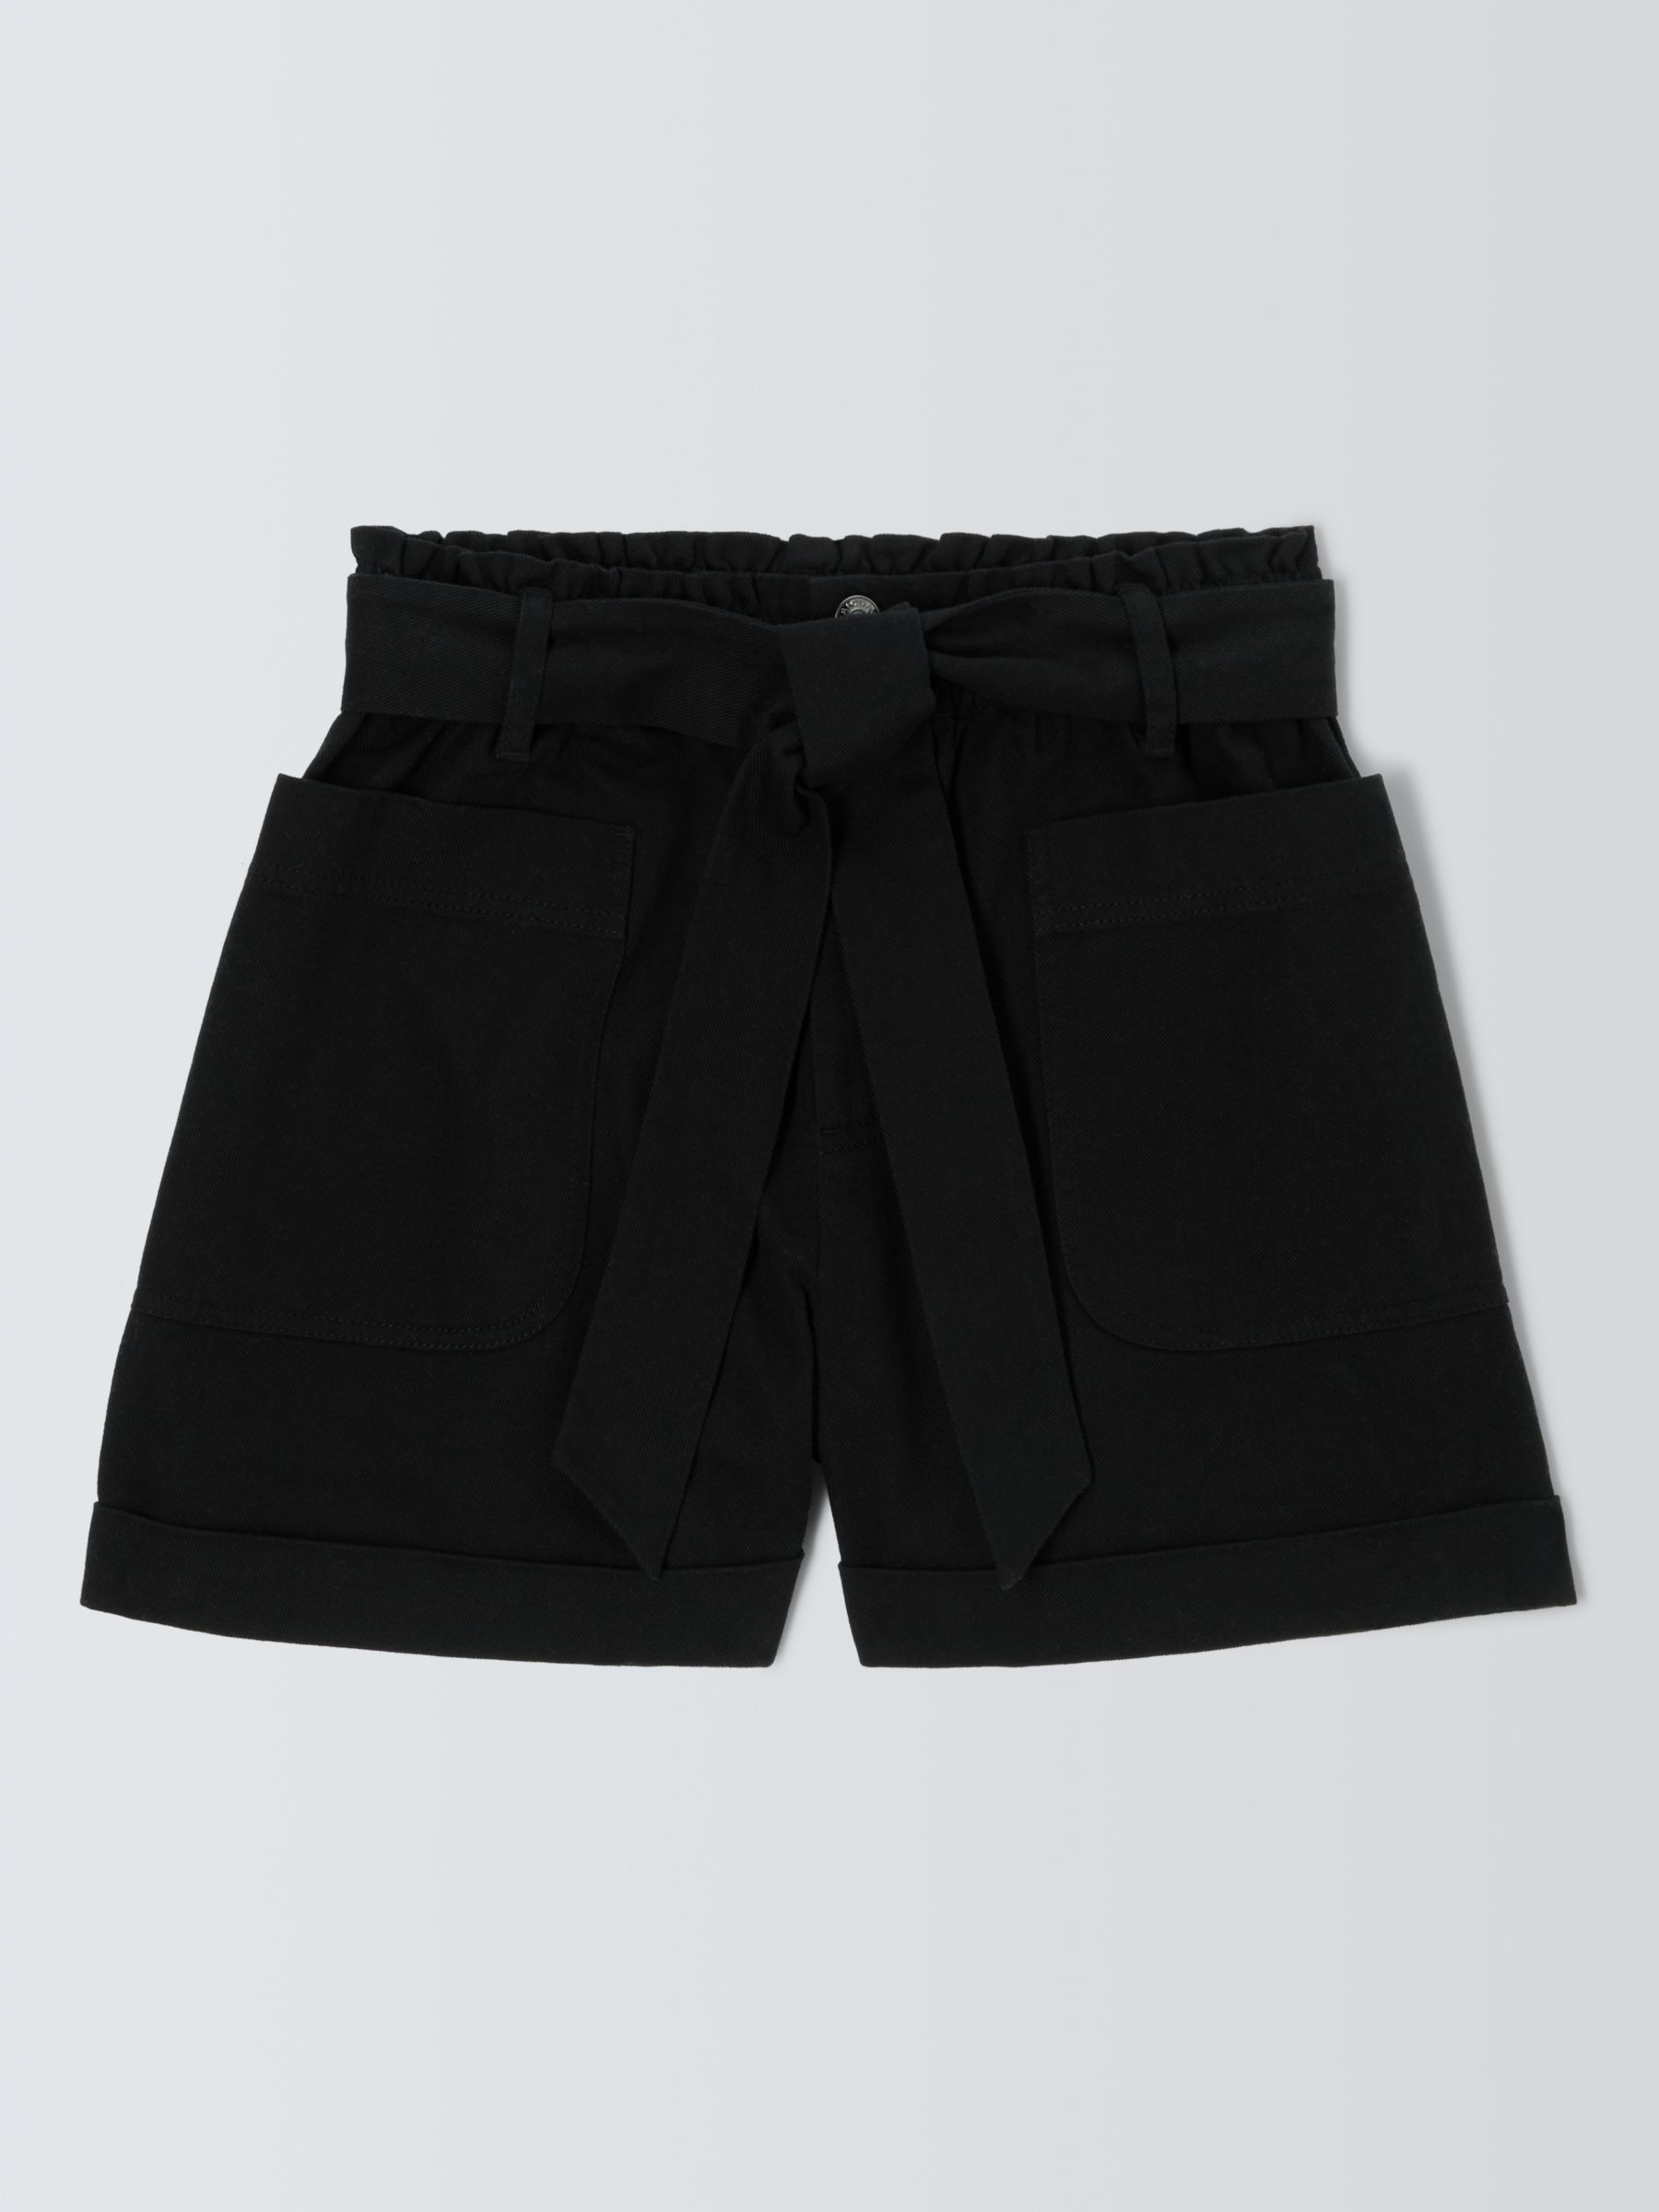 John Lewis ANYDAY Paperbag Cotton Twill Shorts, Black, 6